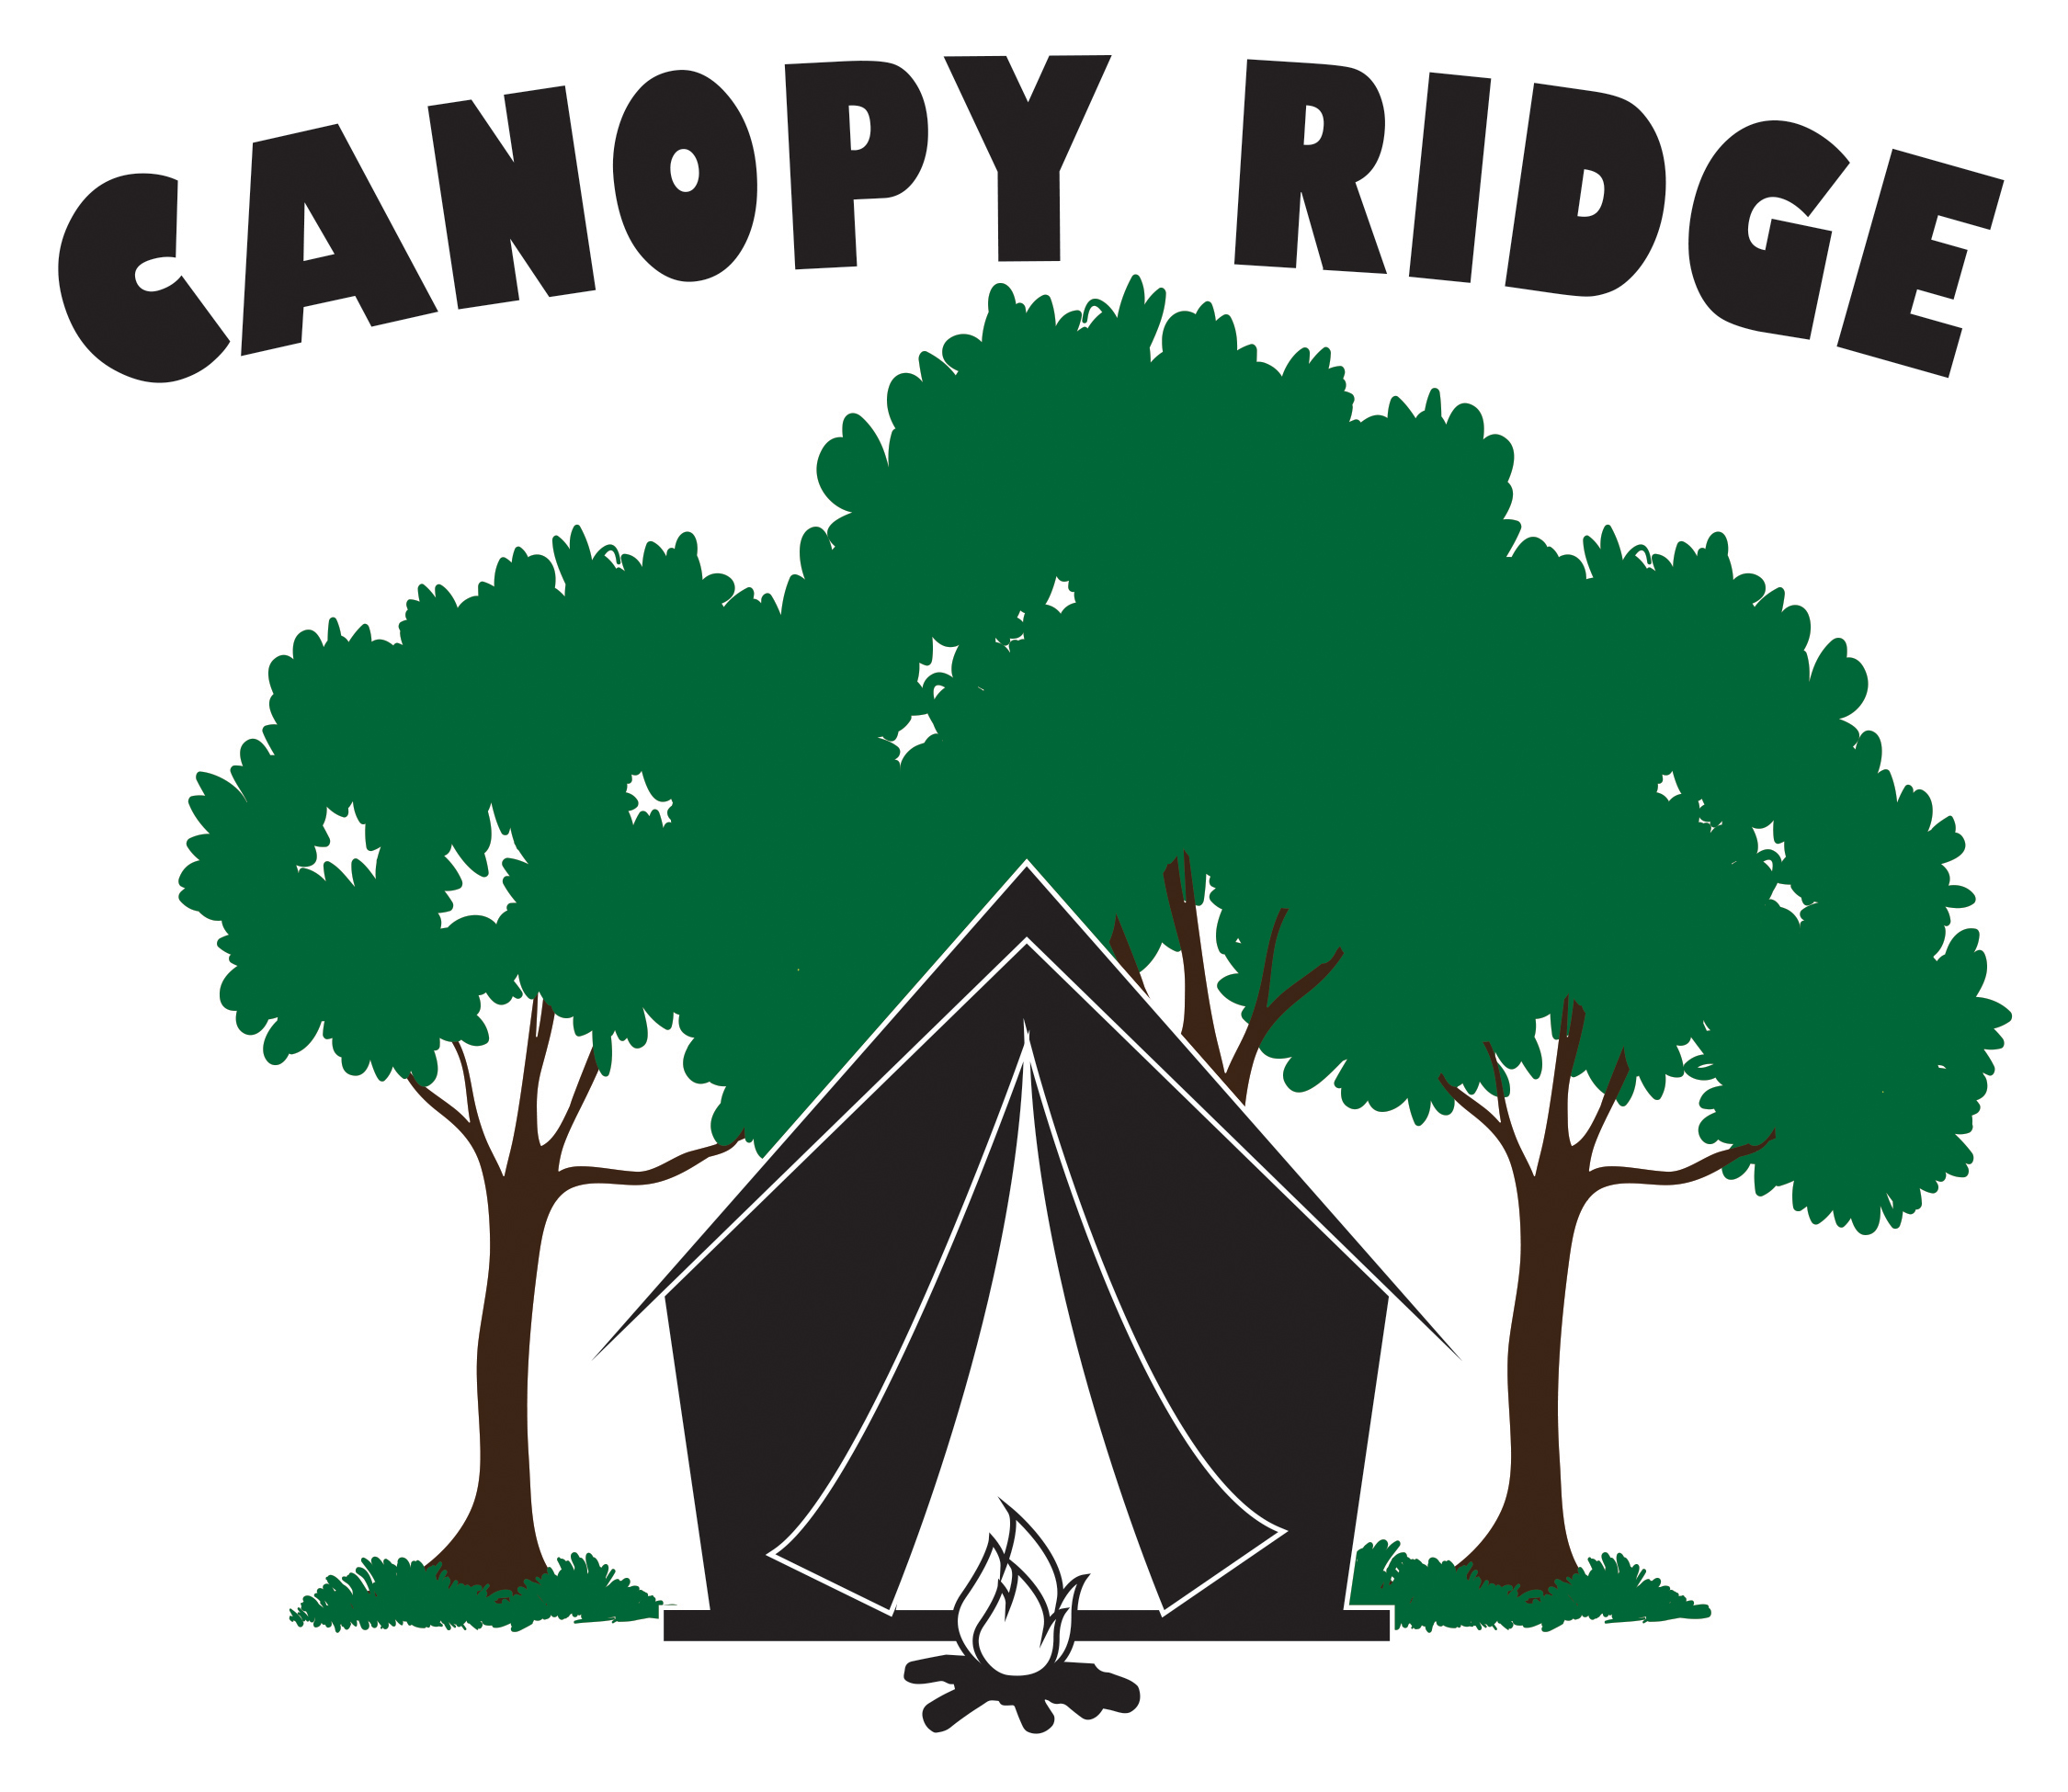 Canopy Ridge